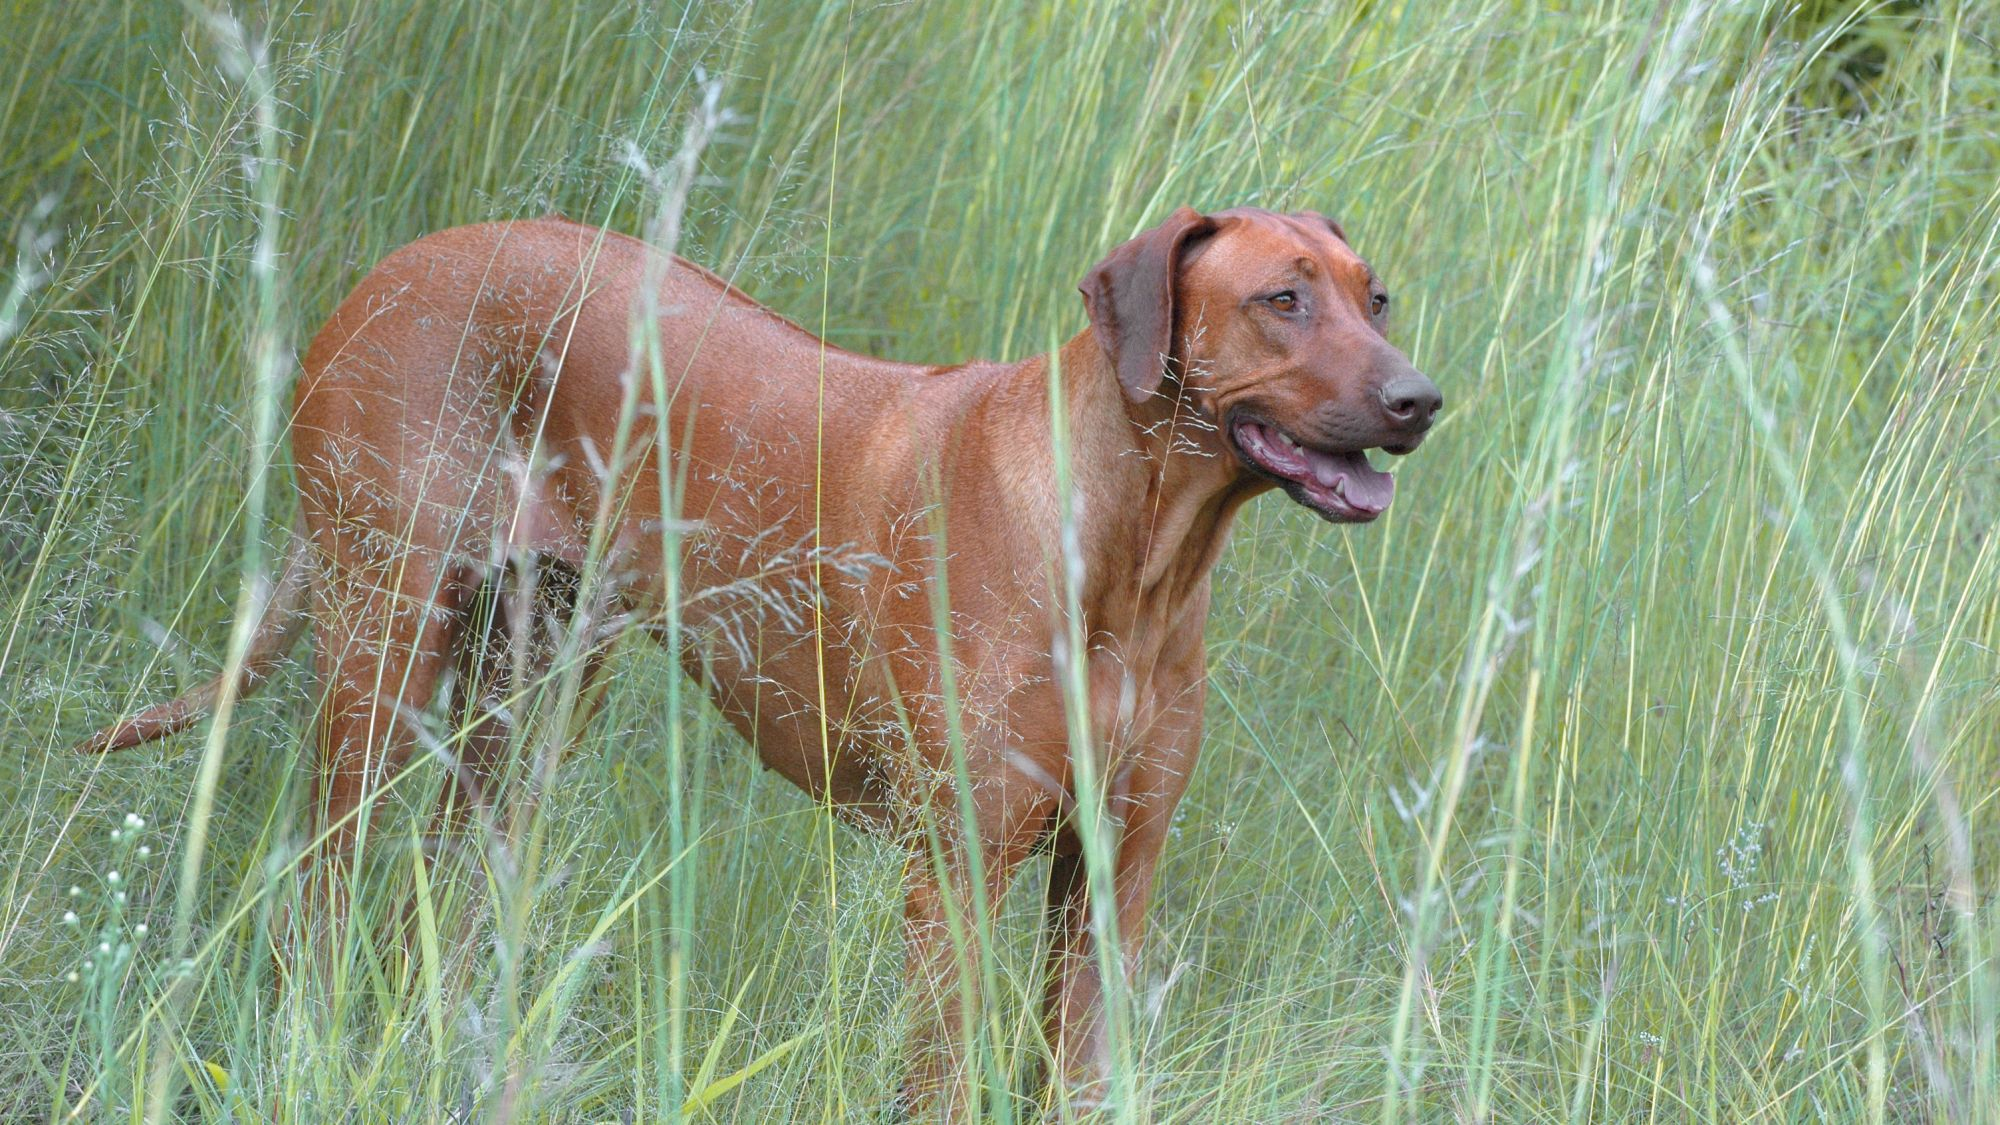 Rhodesian Ridgeback standing in long grass